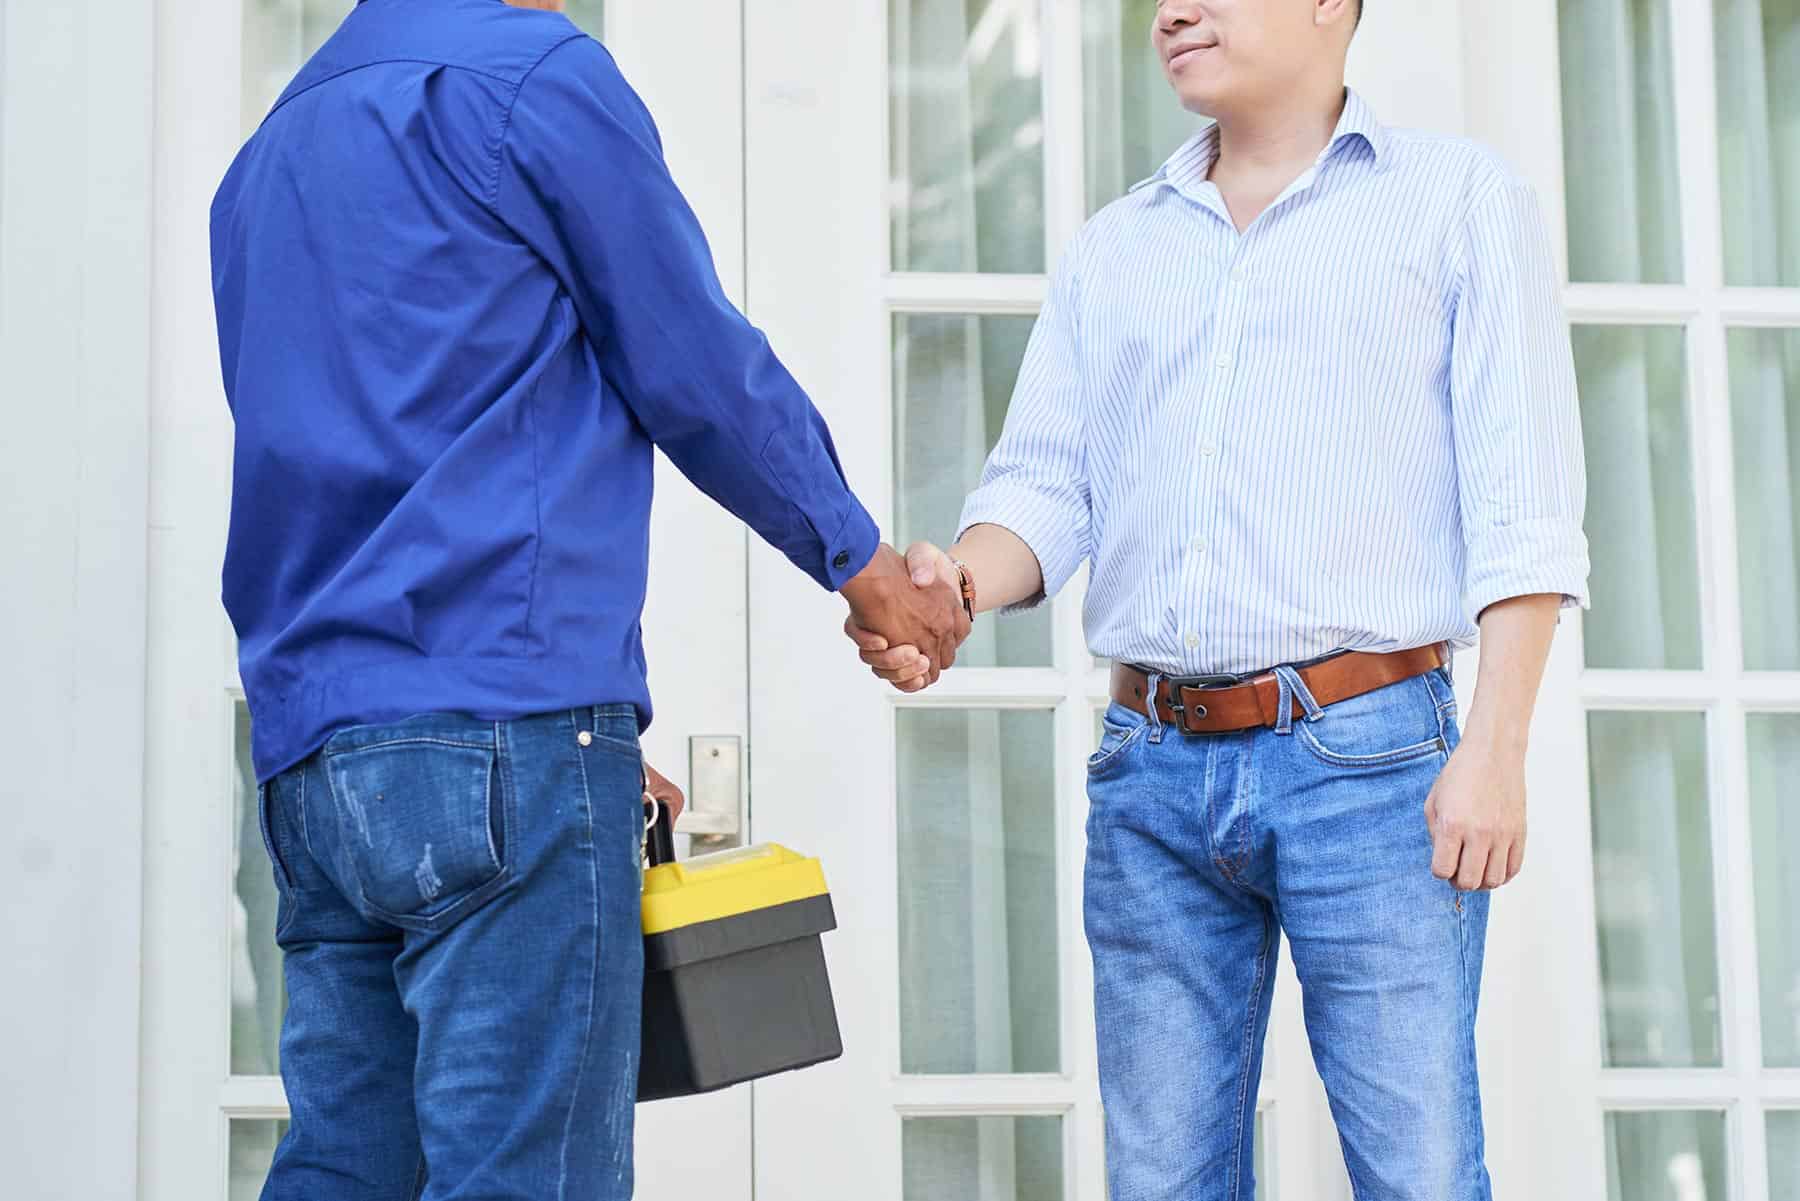 Mississauga Appliance Repair - Dial An Applianceman repair man Handshake with customer